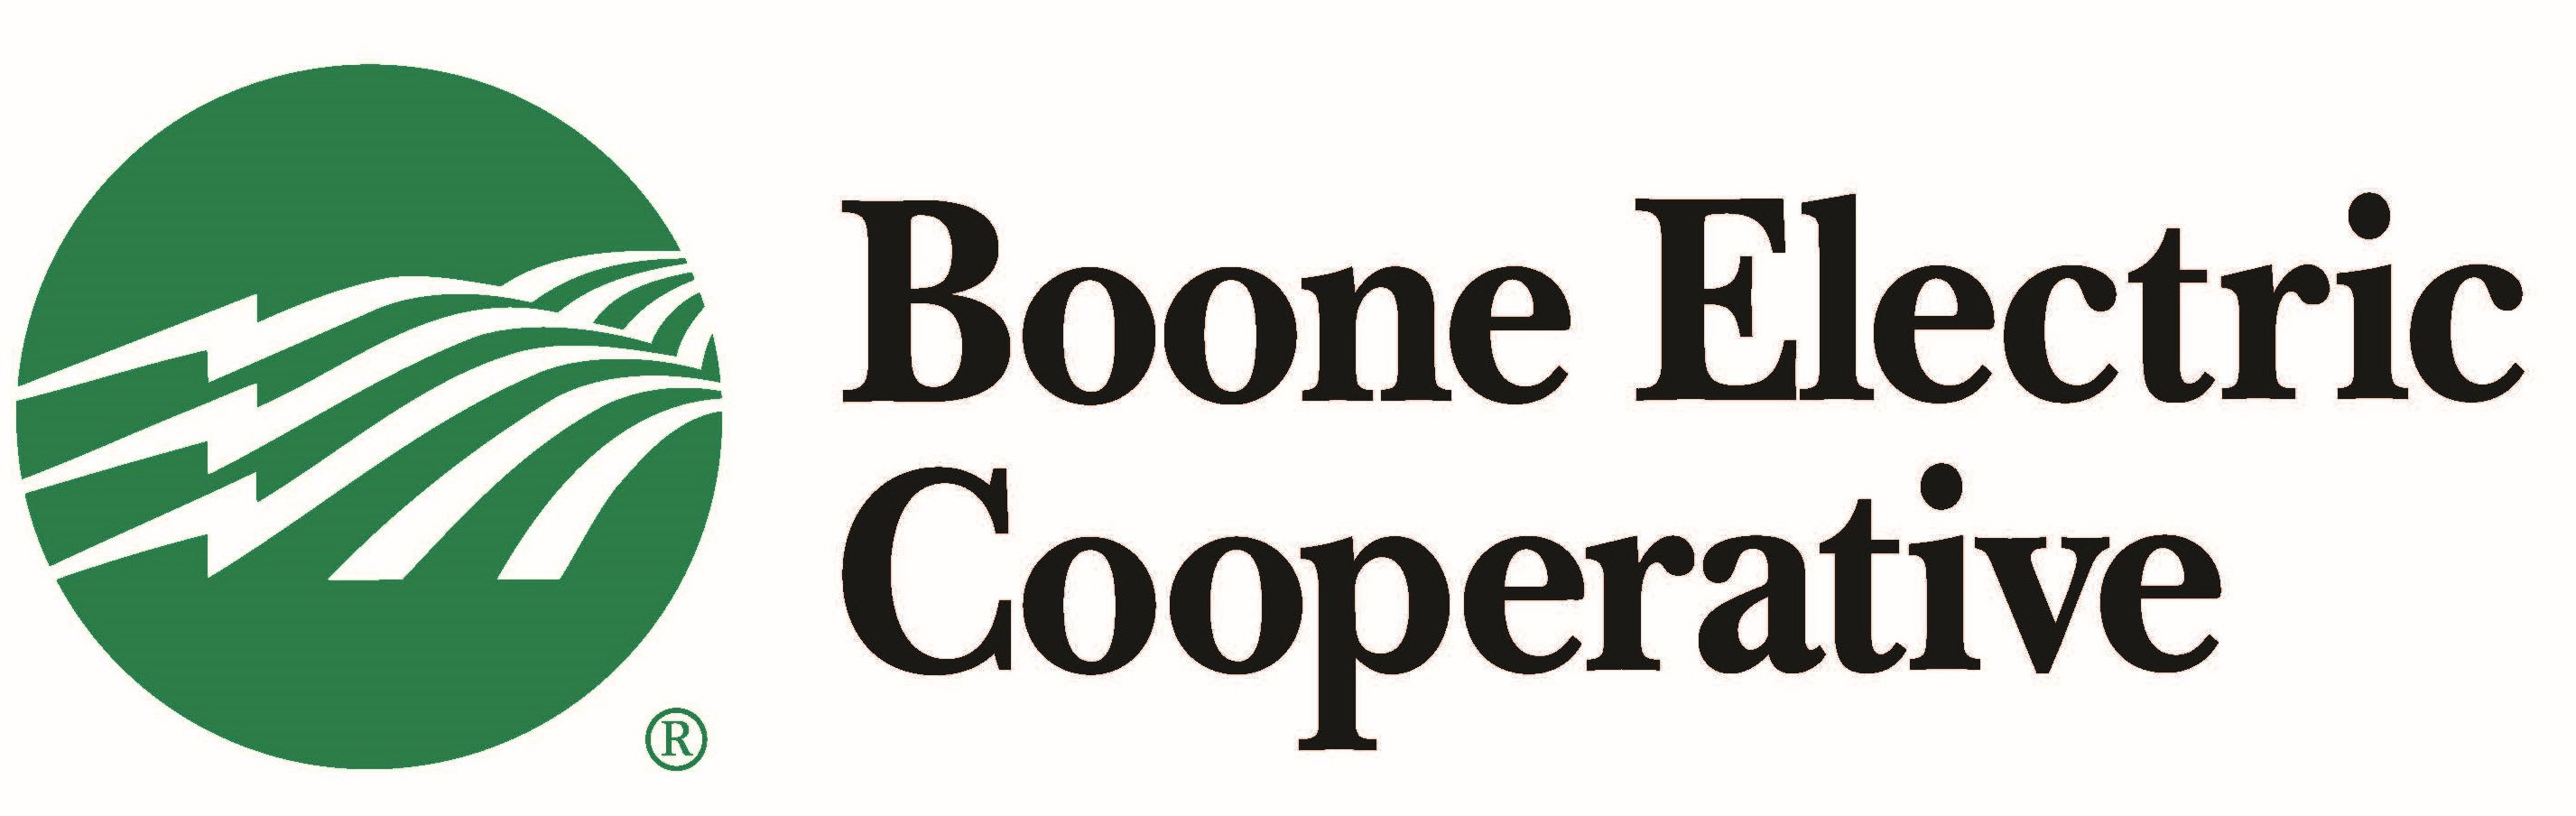 Boone Electric Cooperative logo